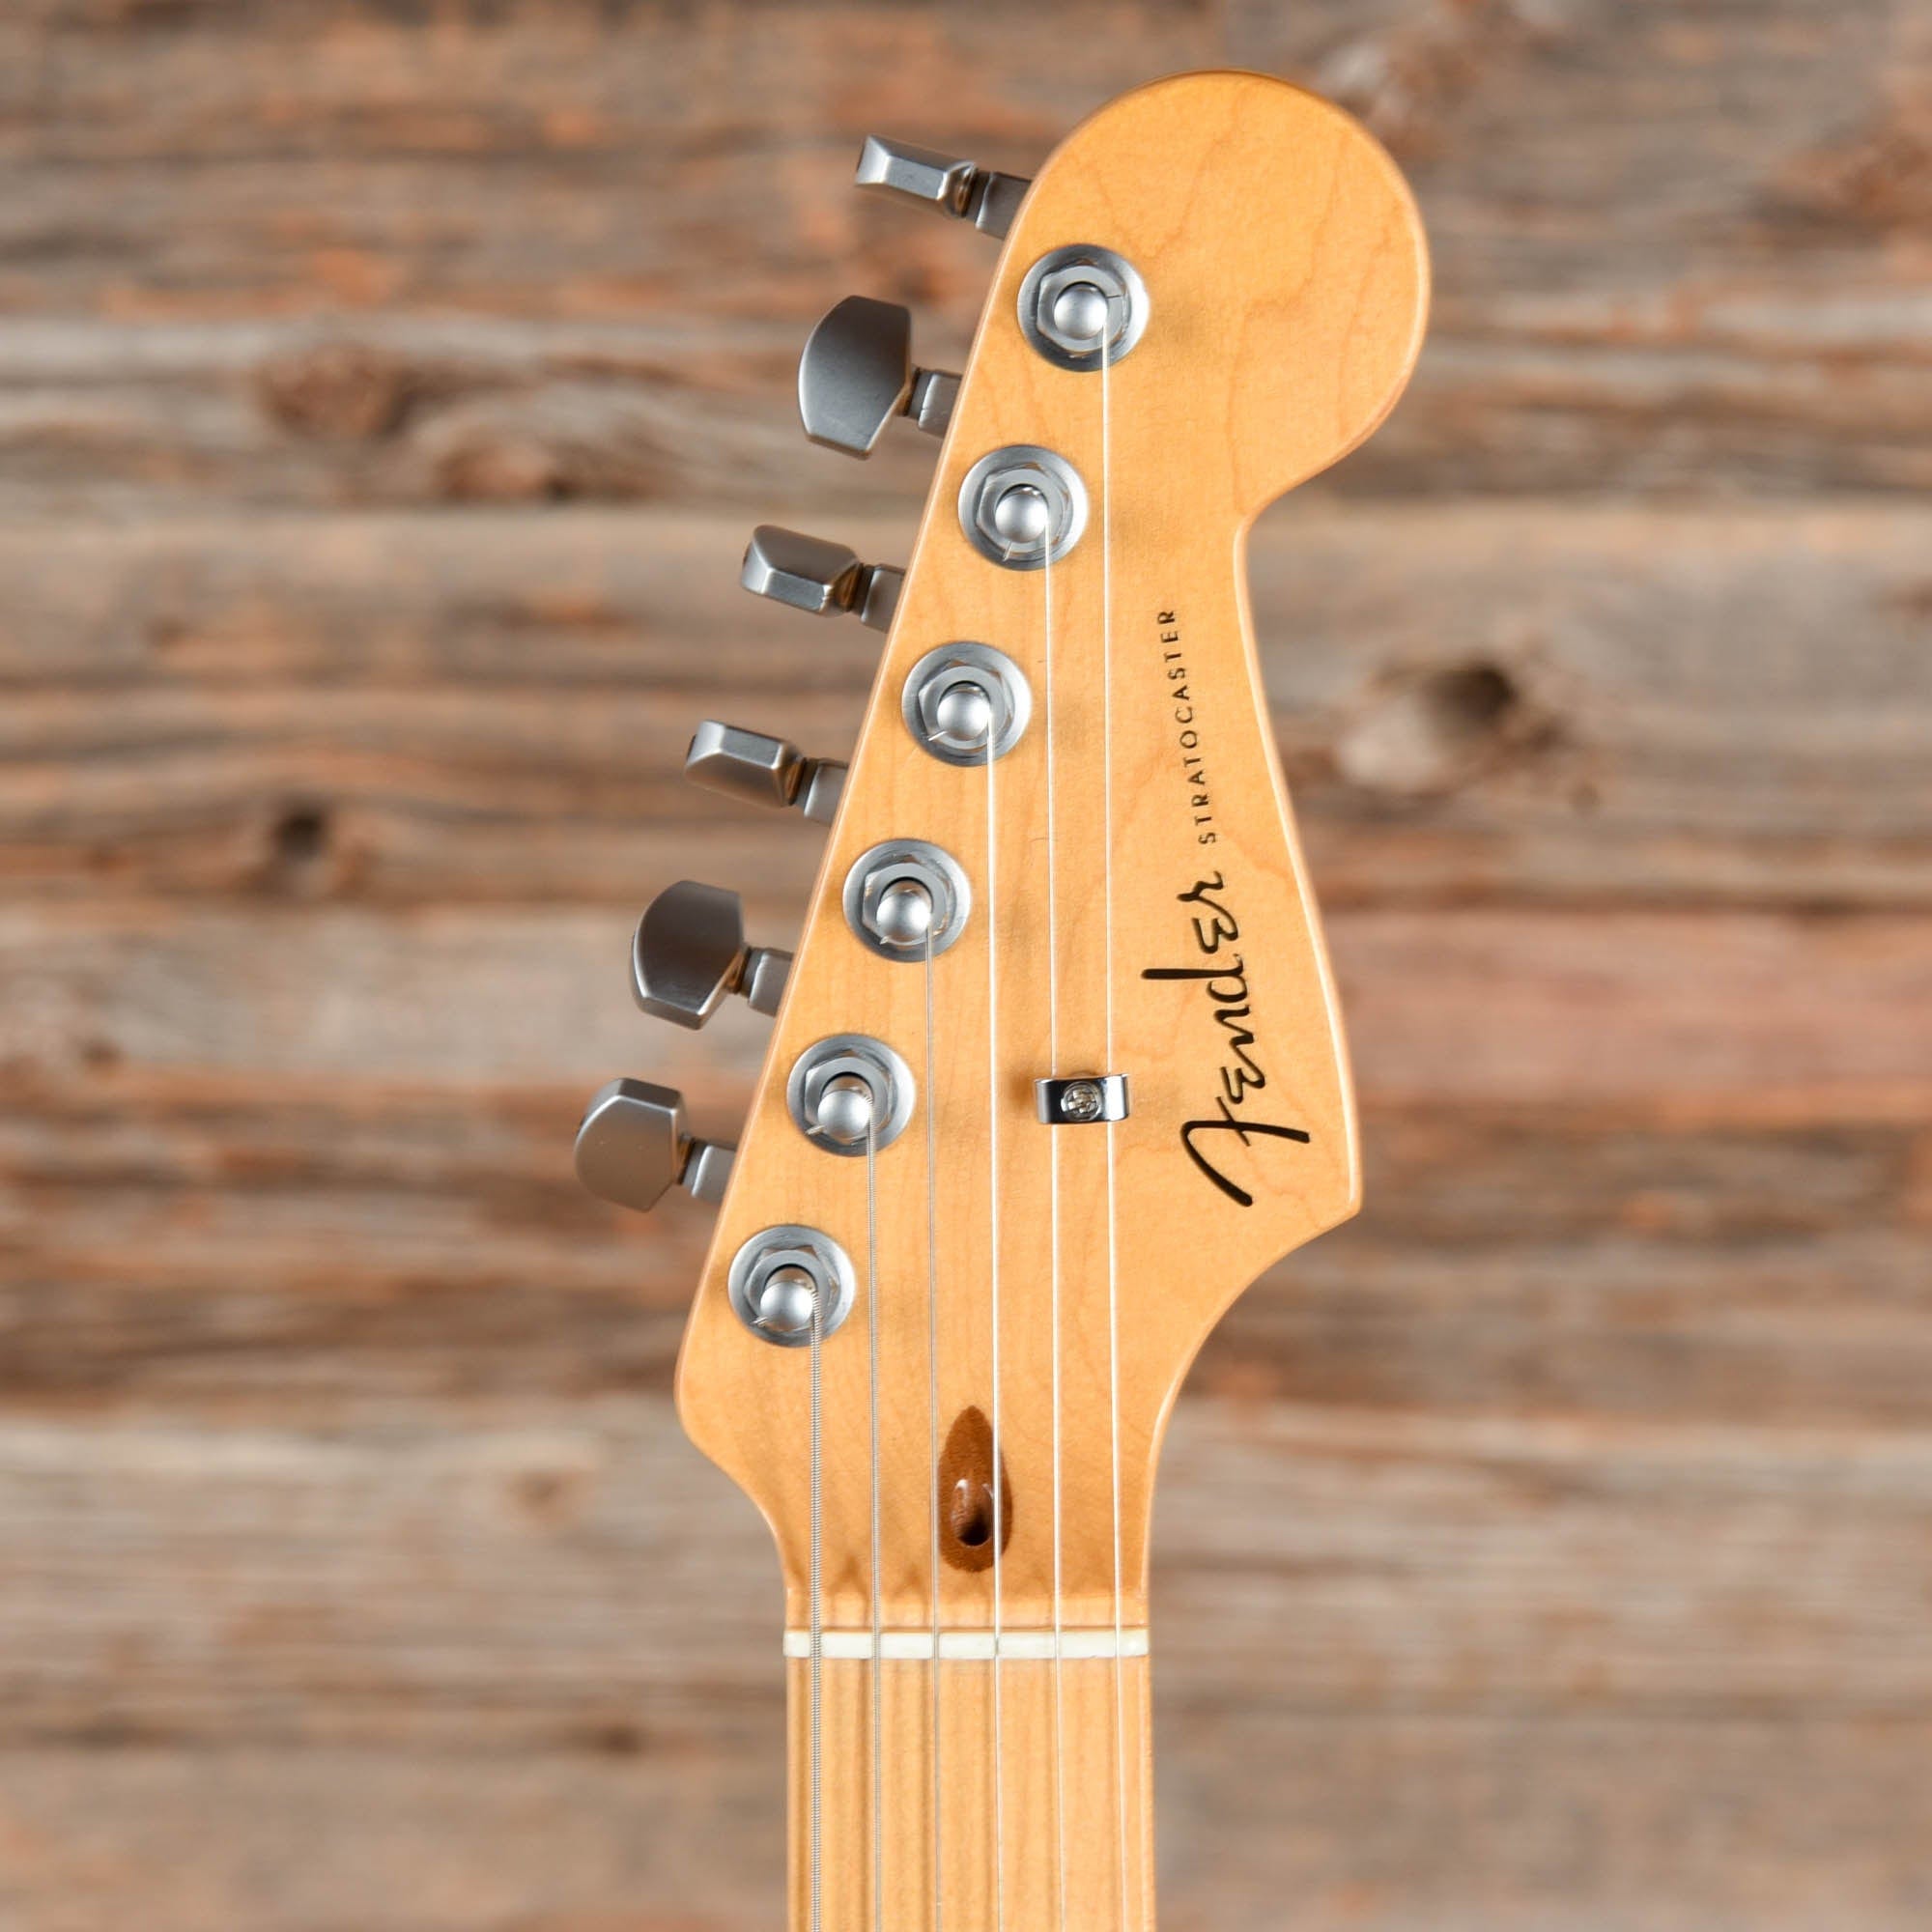 Fender American Ultra Stratocaster Cobra Blue 2021 Electric Guitars / Solid Body